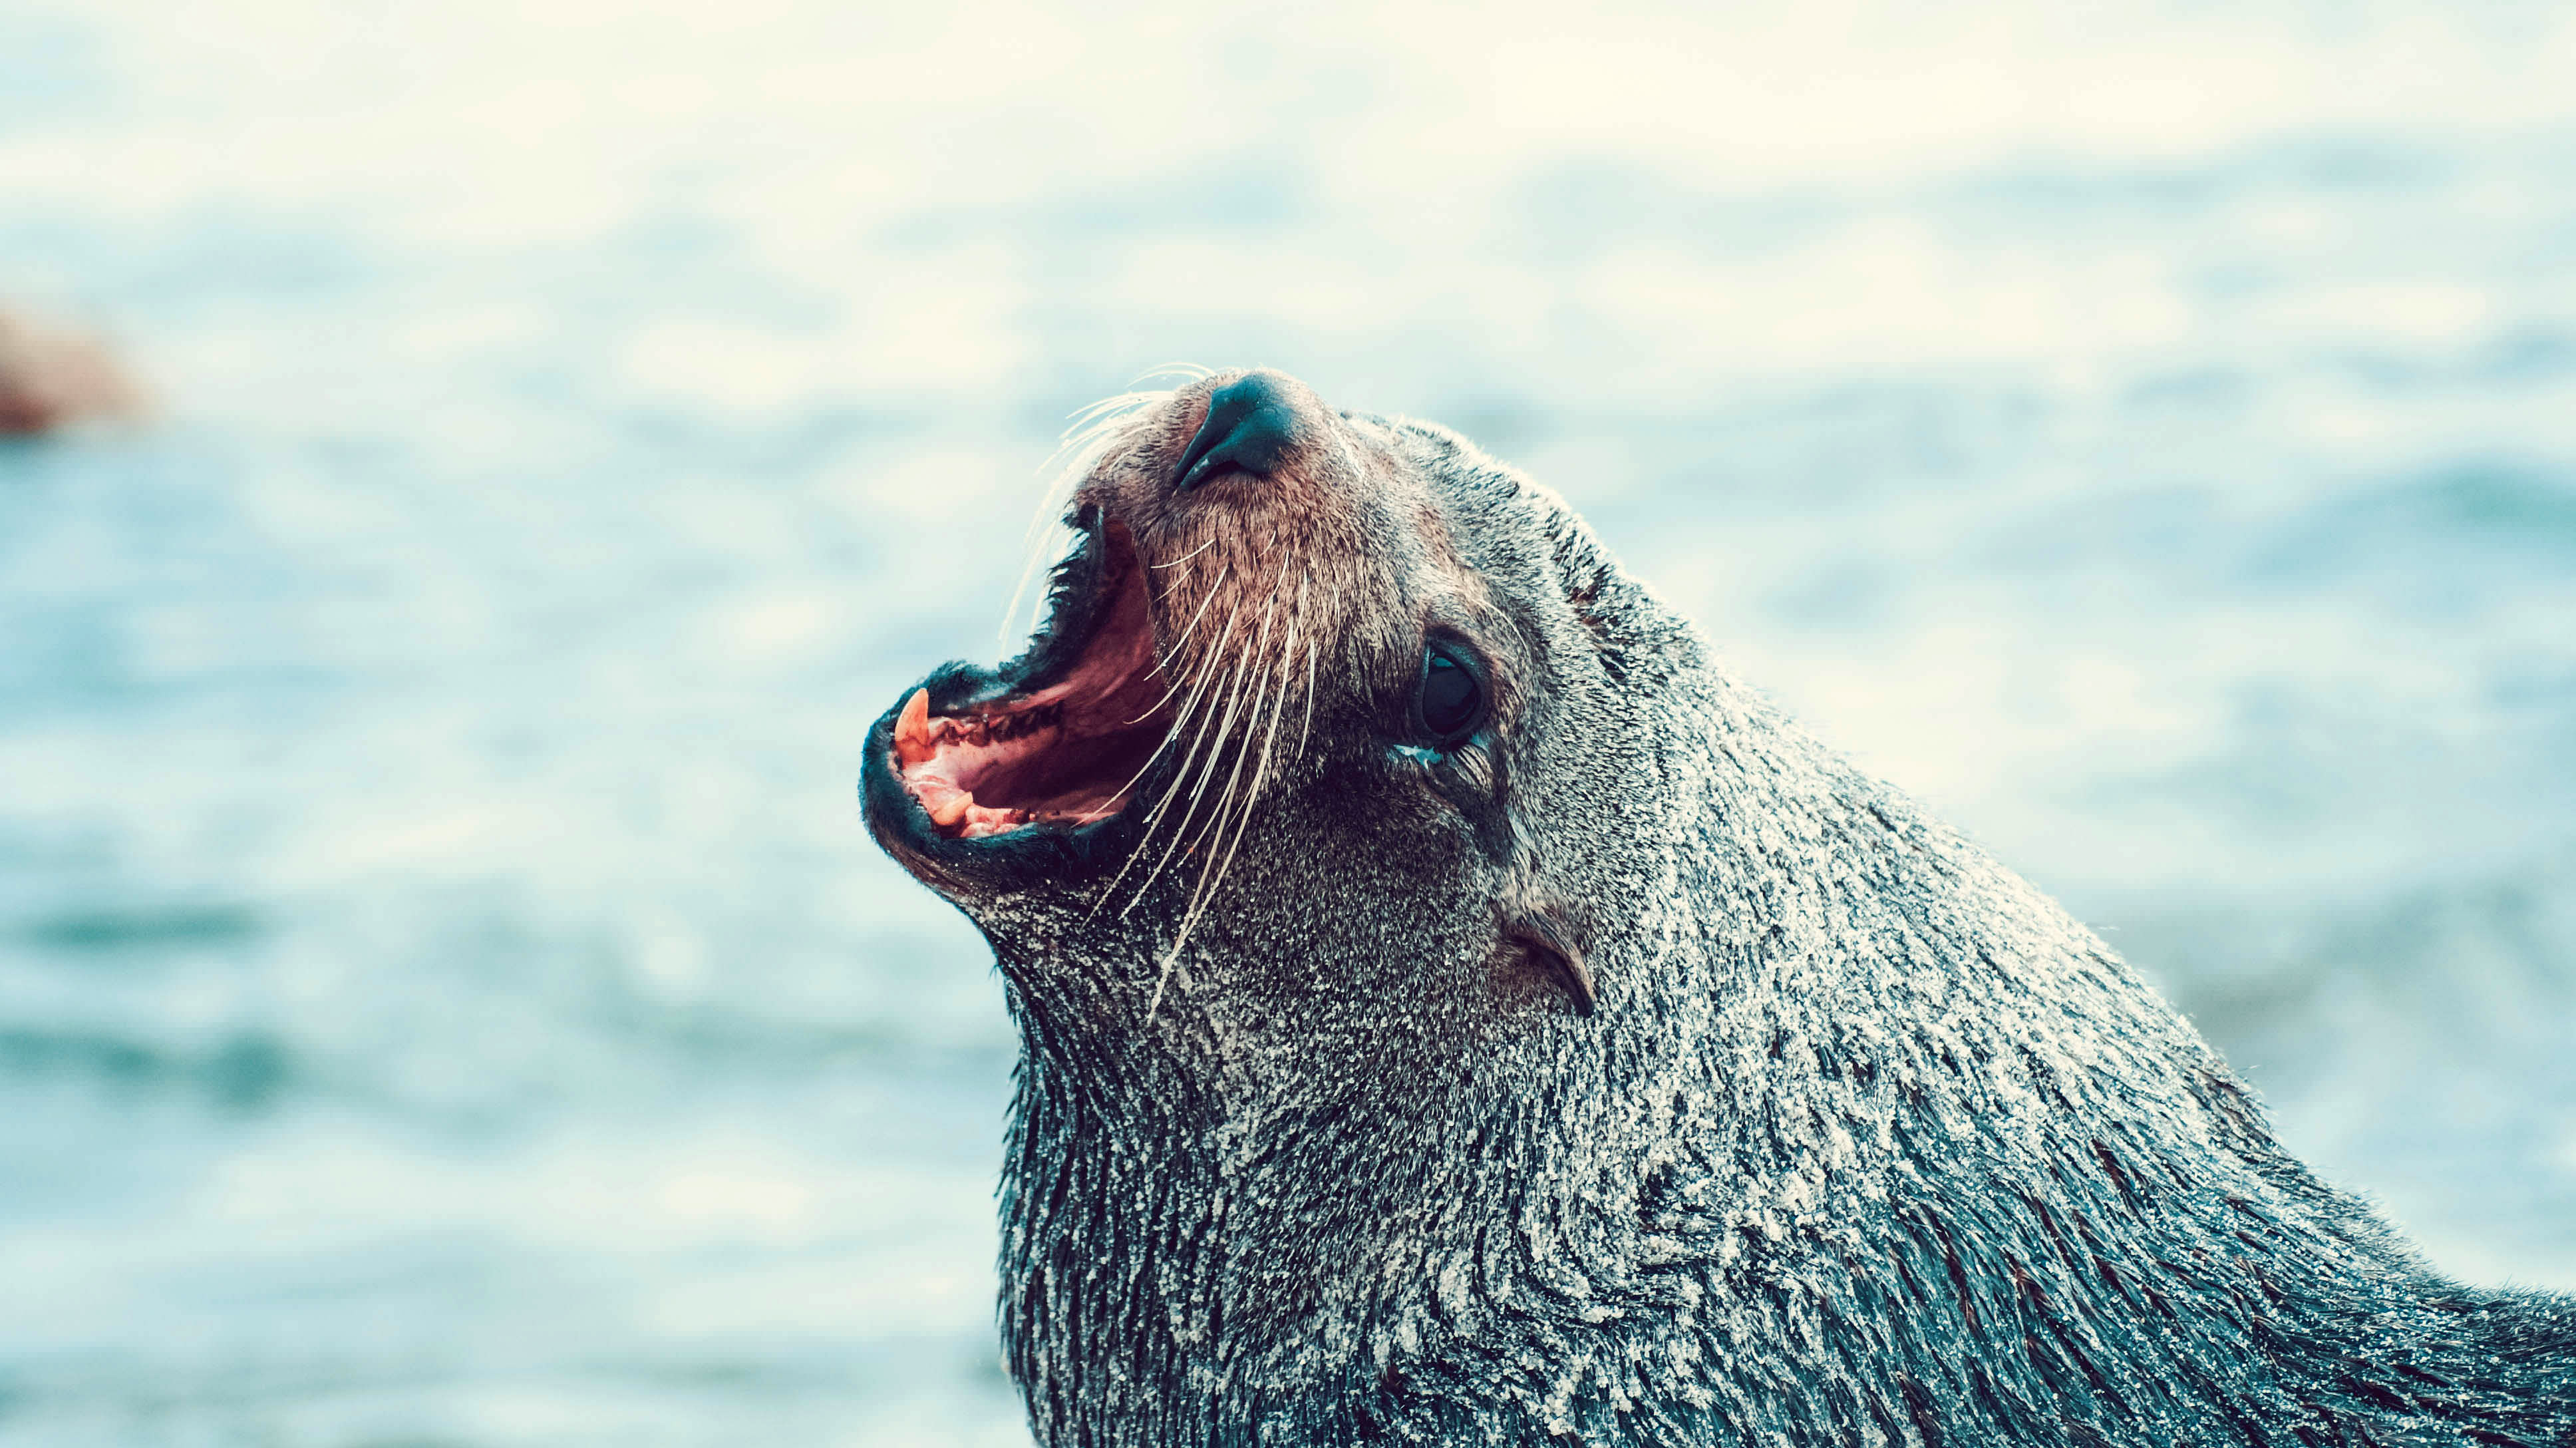 Seal Barking image - Free stock photo - Public Domain ...